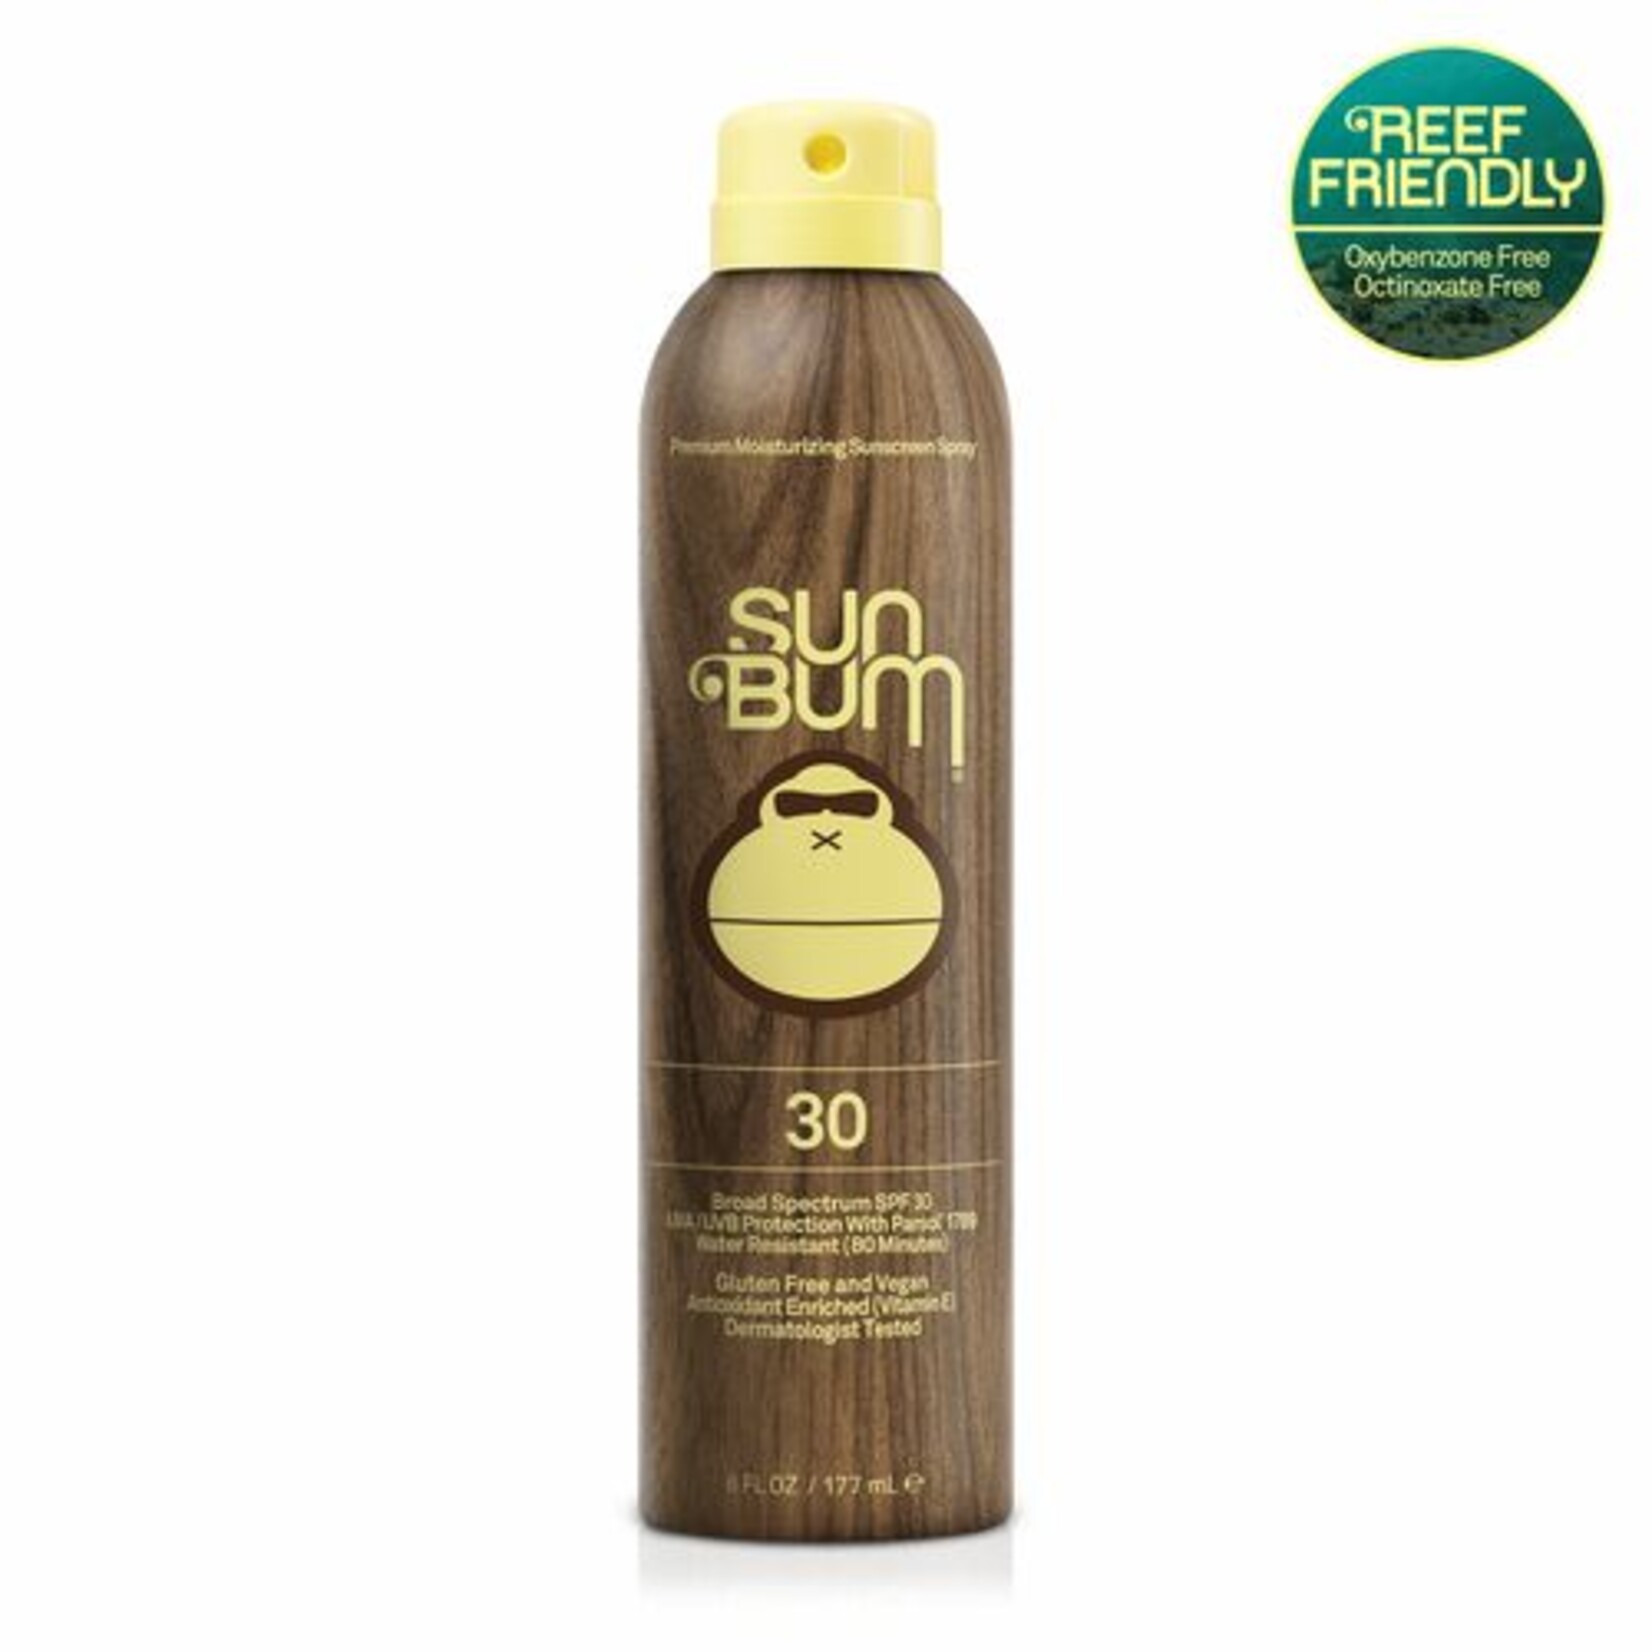 Sun Bum SunBum Spray SPF 30 6oz